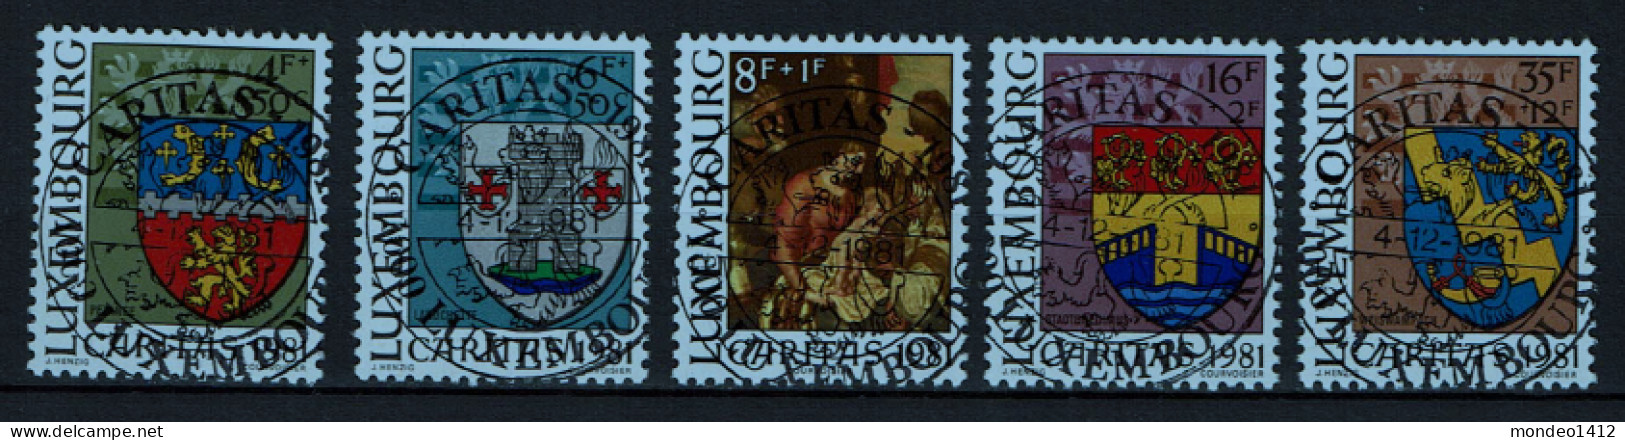 Luxembourg 1981 - YT 991/995 - Town Arms - Caritas Issue, Armoiries Communales, Wappenschilde, Tableau - Gebruikt